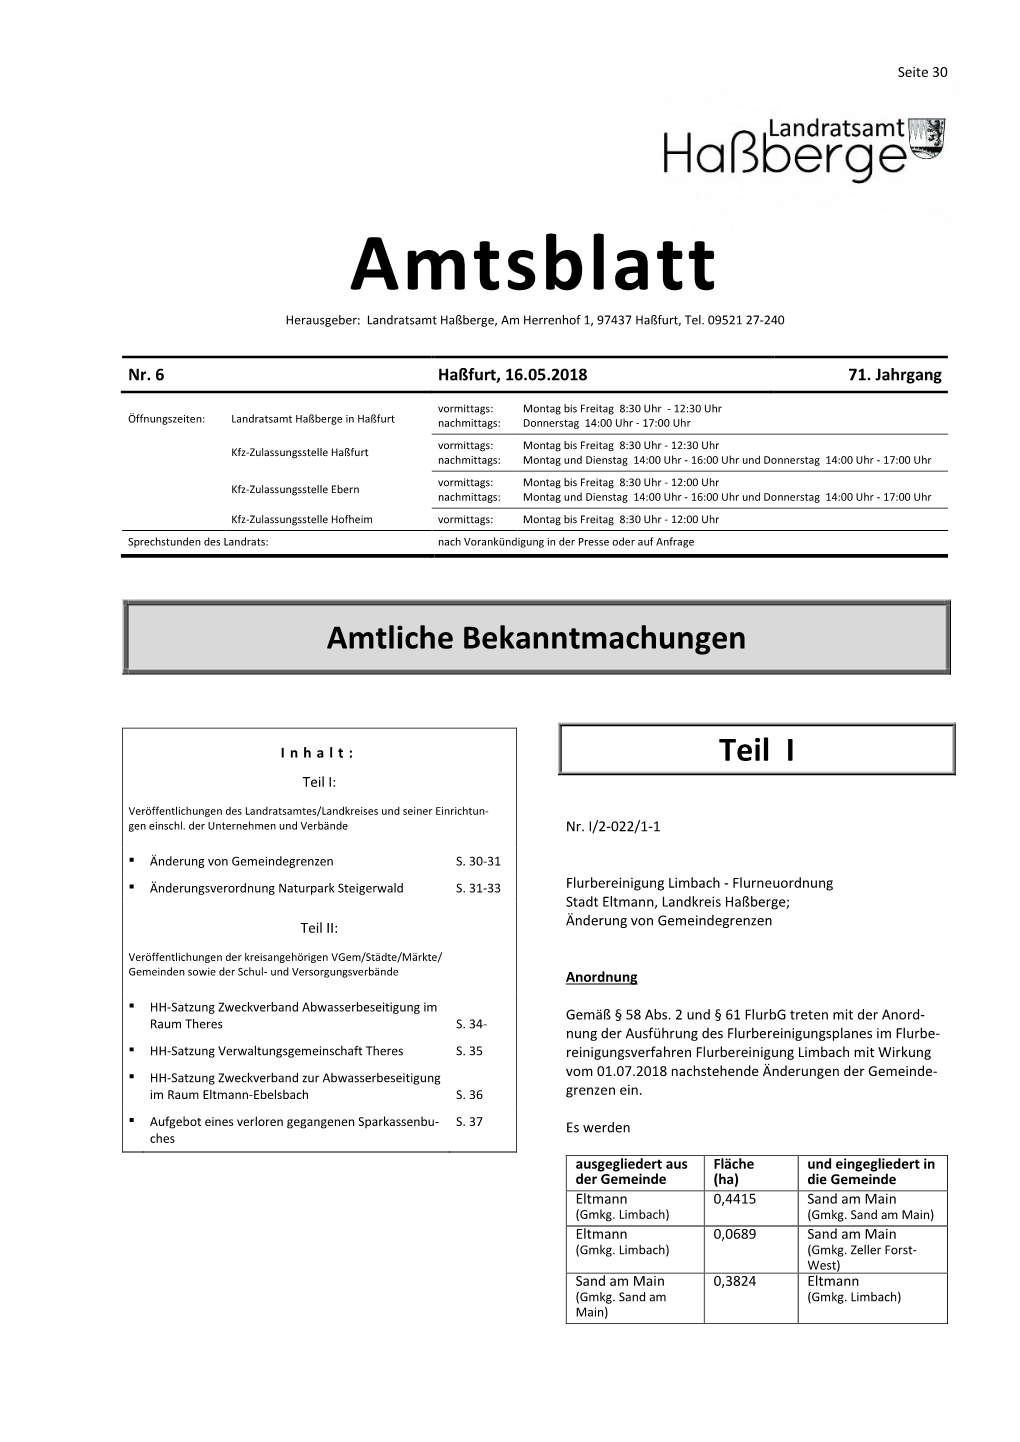 Amtsblatt Herausgeber: Landratsamt Haßberge, Am Herrenhof 1, 97437 Haßfurt, Tel